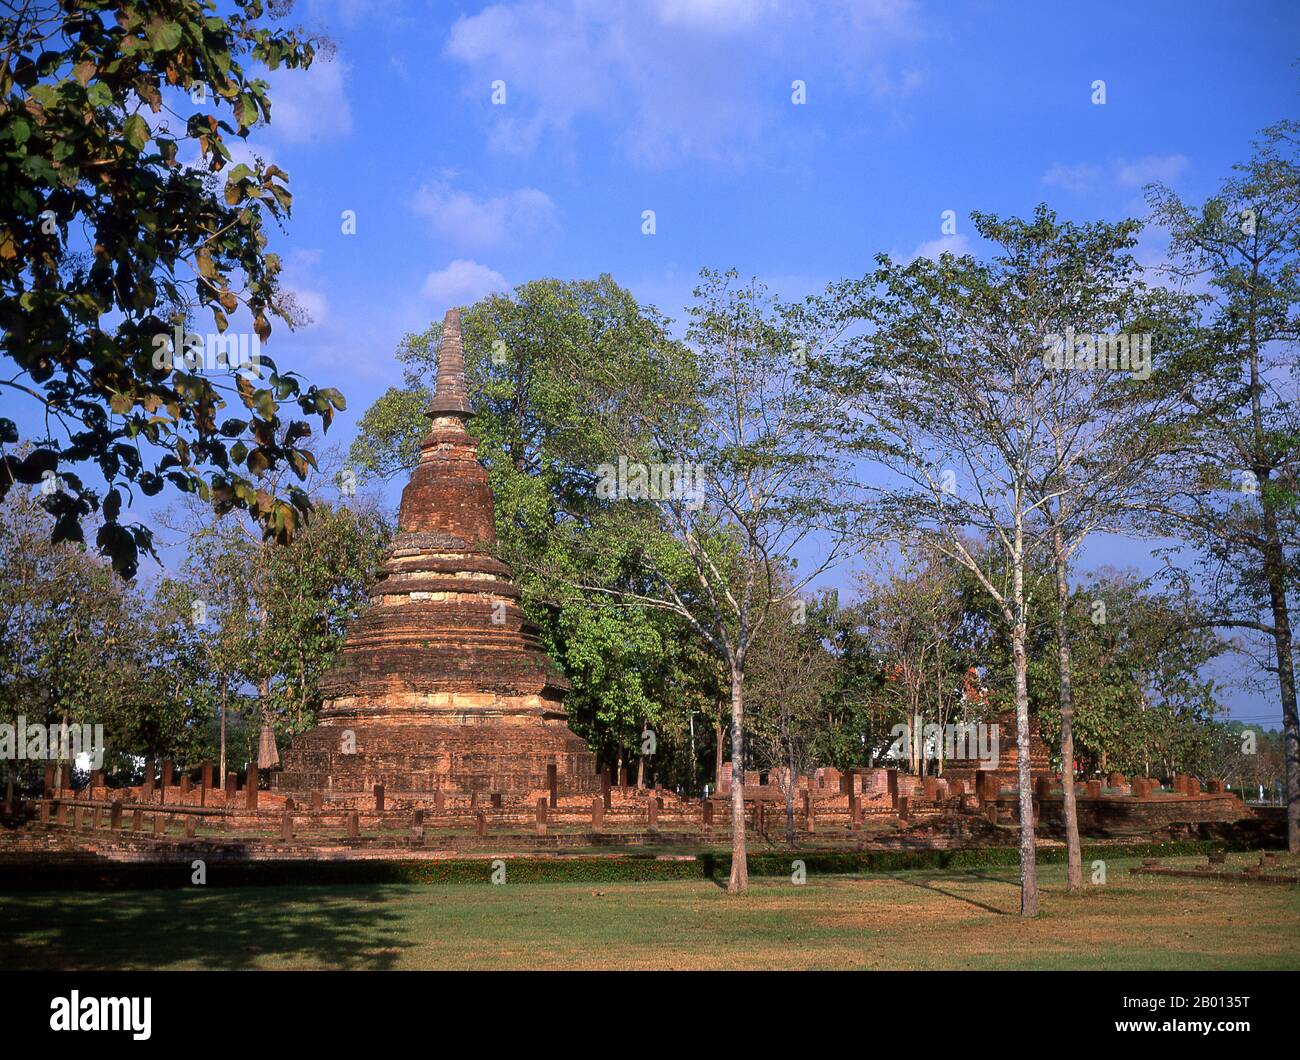 Thailandia: Wat Phra That, Kamphaeng Phet Parco storico. Kamphaeng Phet Historical Park nel centro della Thailandia era una volta parte del regno di Sukhothai che fiorì nel XIII e XIV secolo. Il regno di Sukhothai fu il primo dei regni tailandesi. Foto Stock